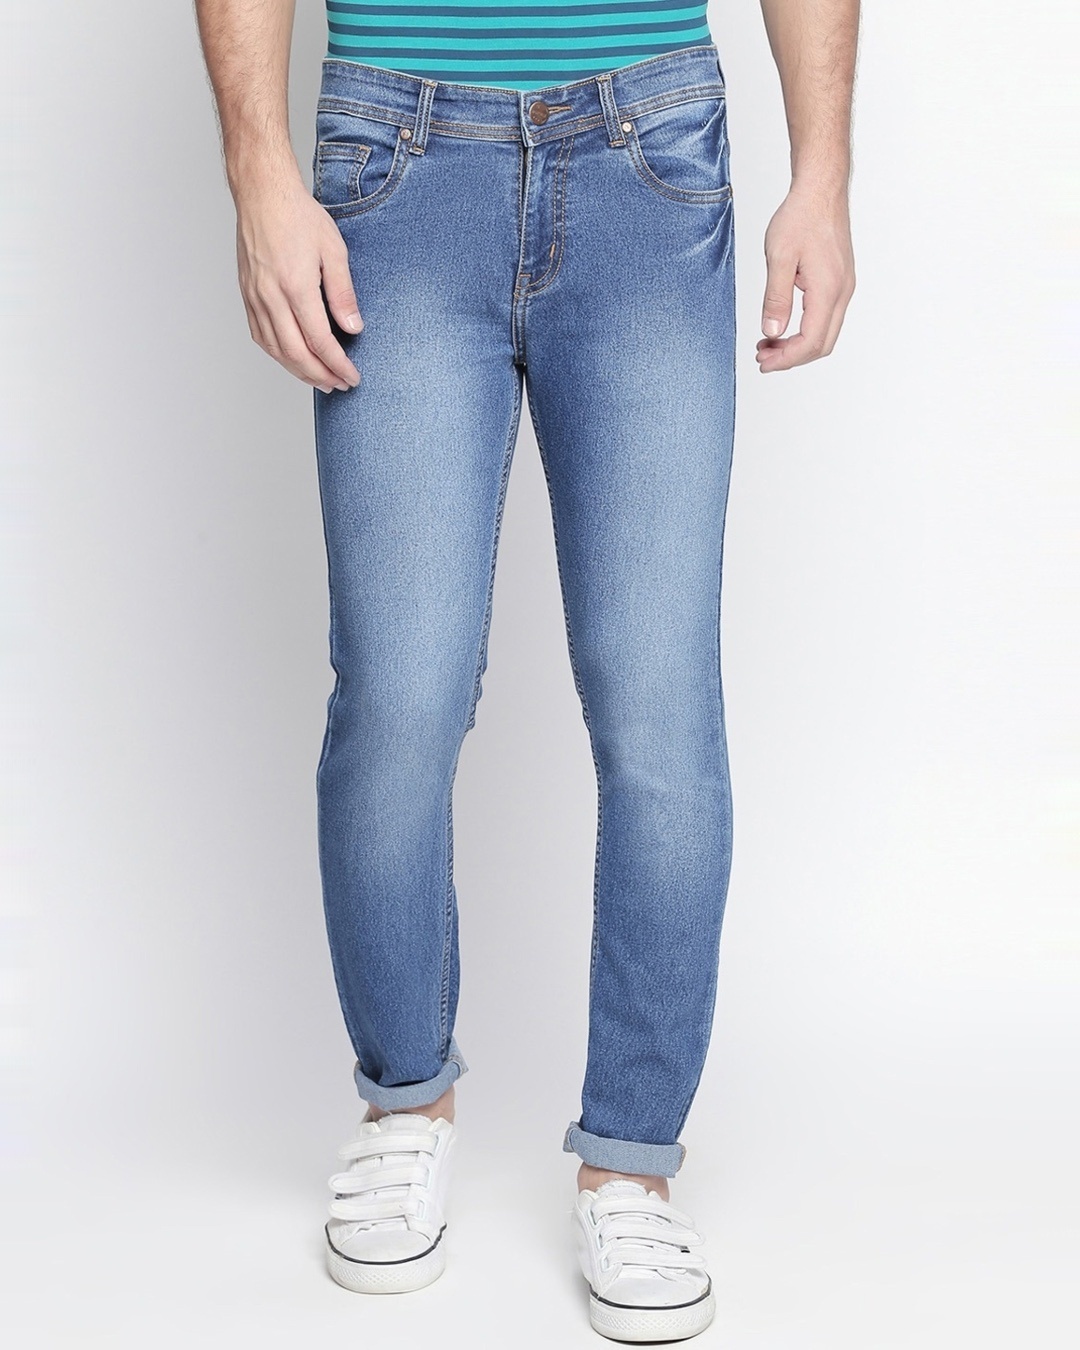 Buy Men's Blue Slim Fit Faded Jeans for Men Blue Online at Bewakoof